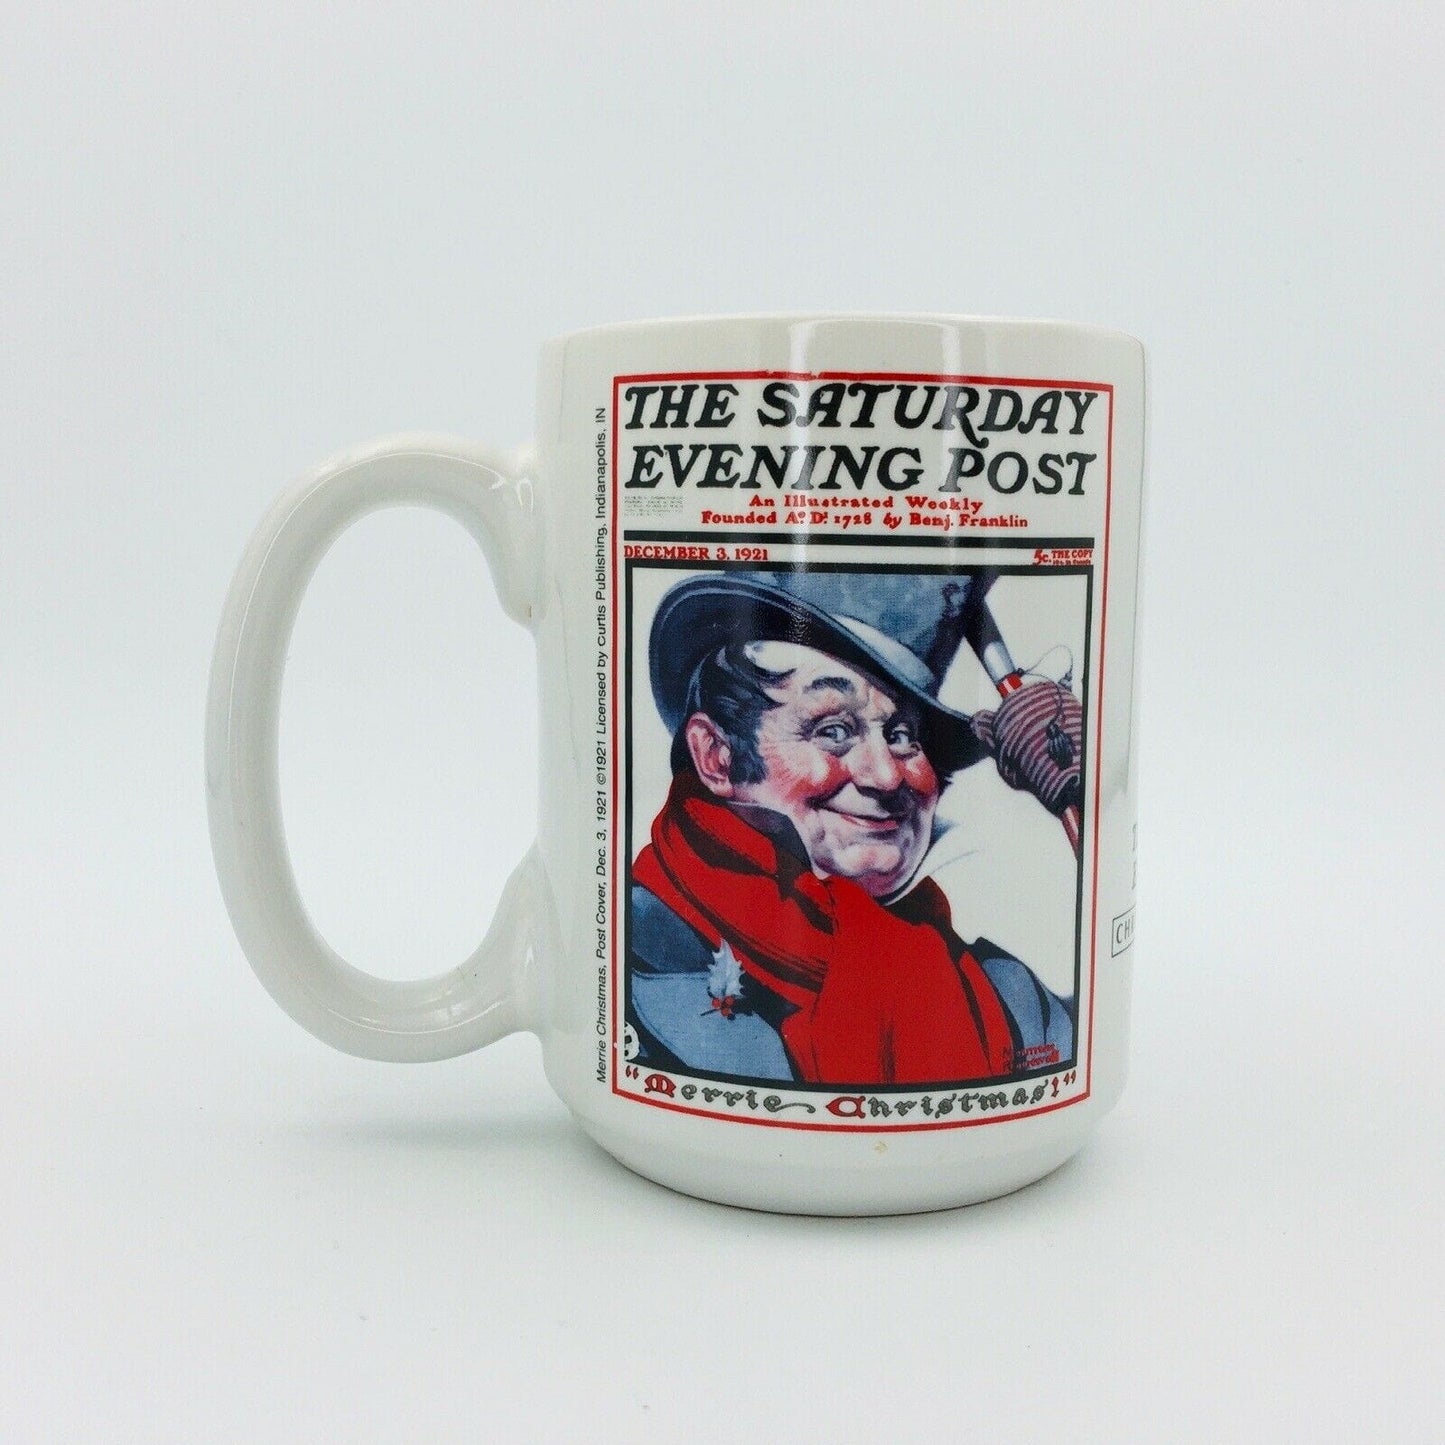 Norman Rockwell Saturday Evening Post Coffee Mug Christmas Collection Dec 3 1921